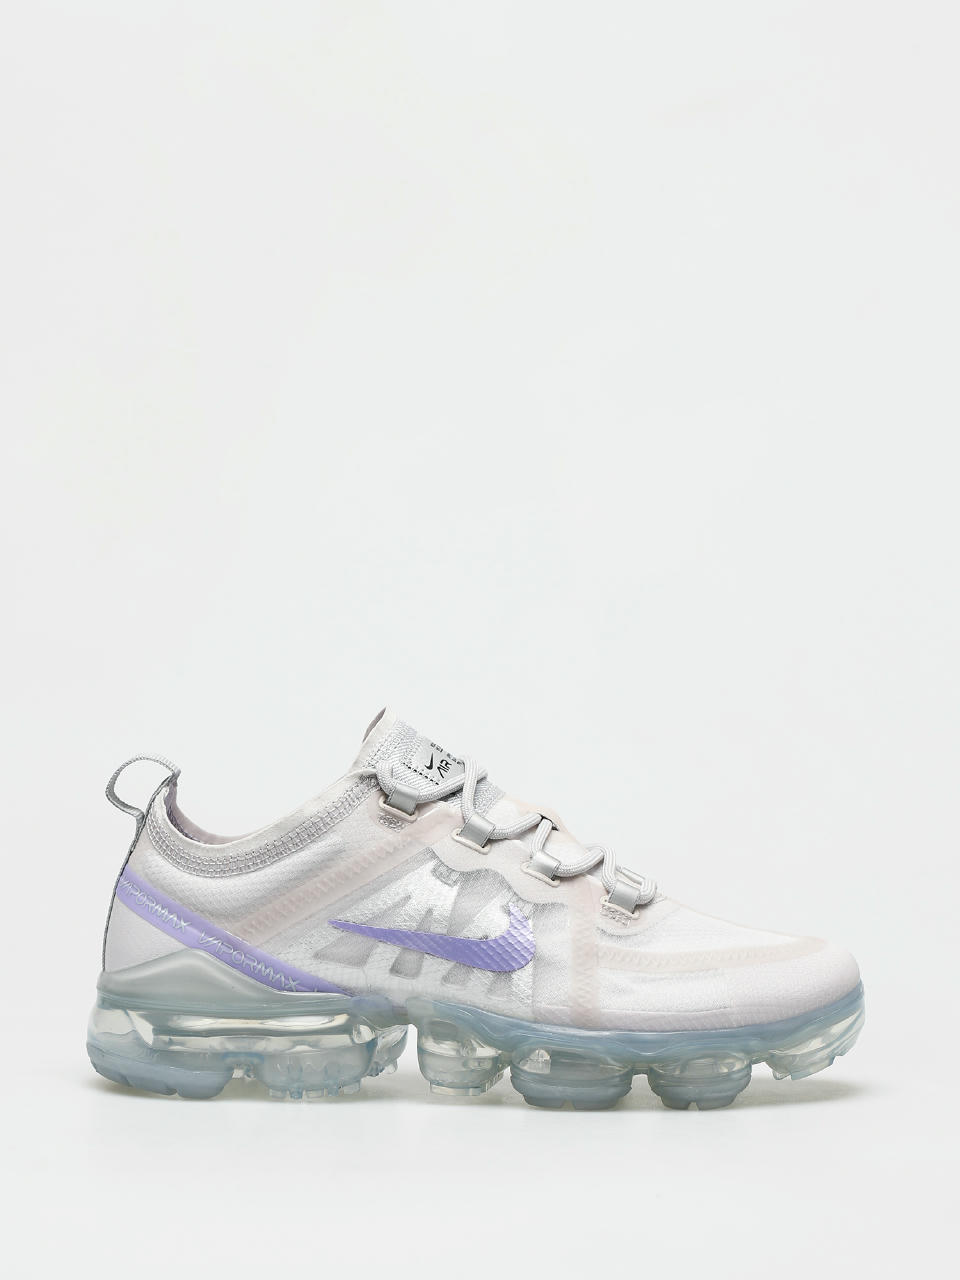 Air 2019 Se Shoes grey/purple agate wolf grey)